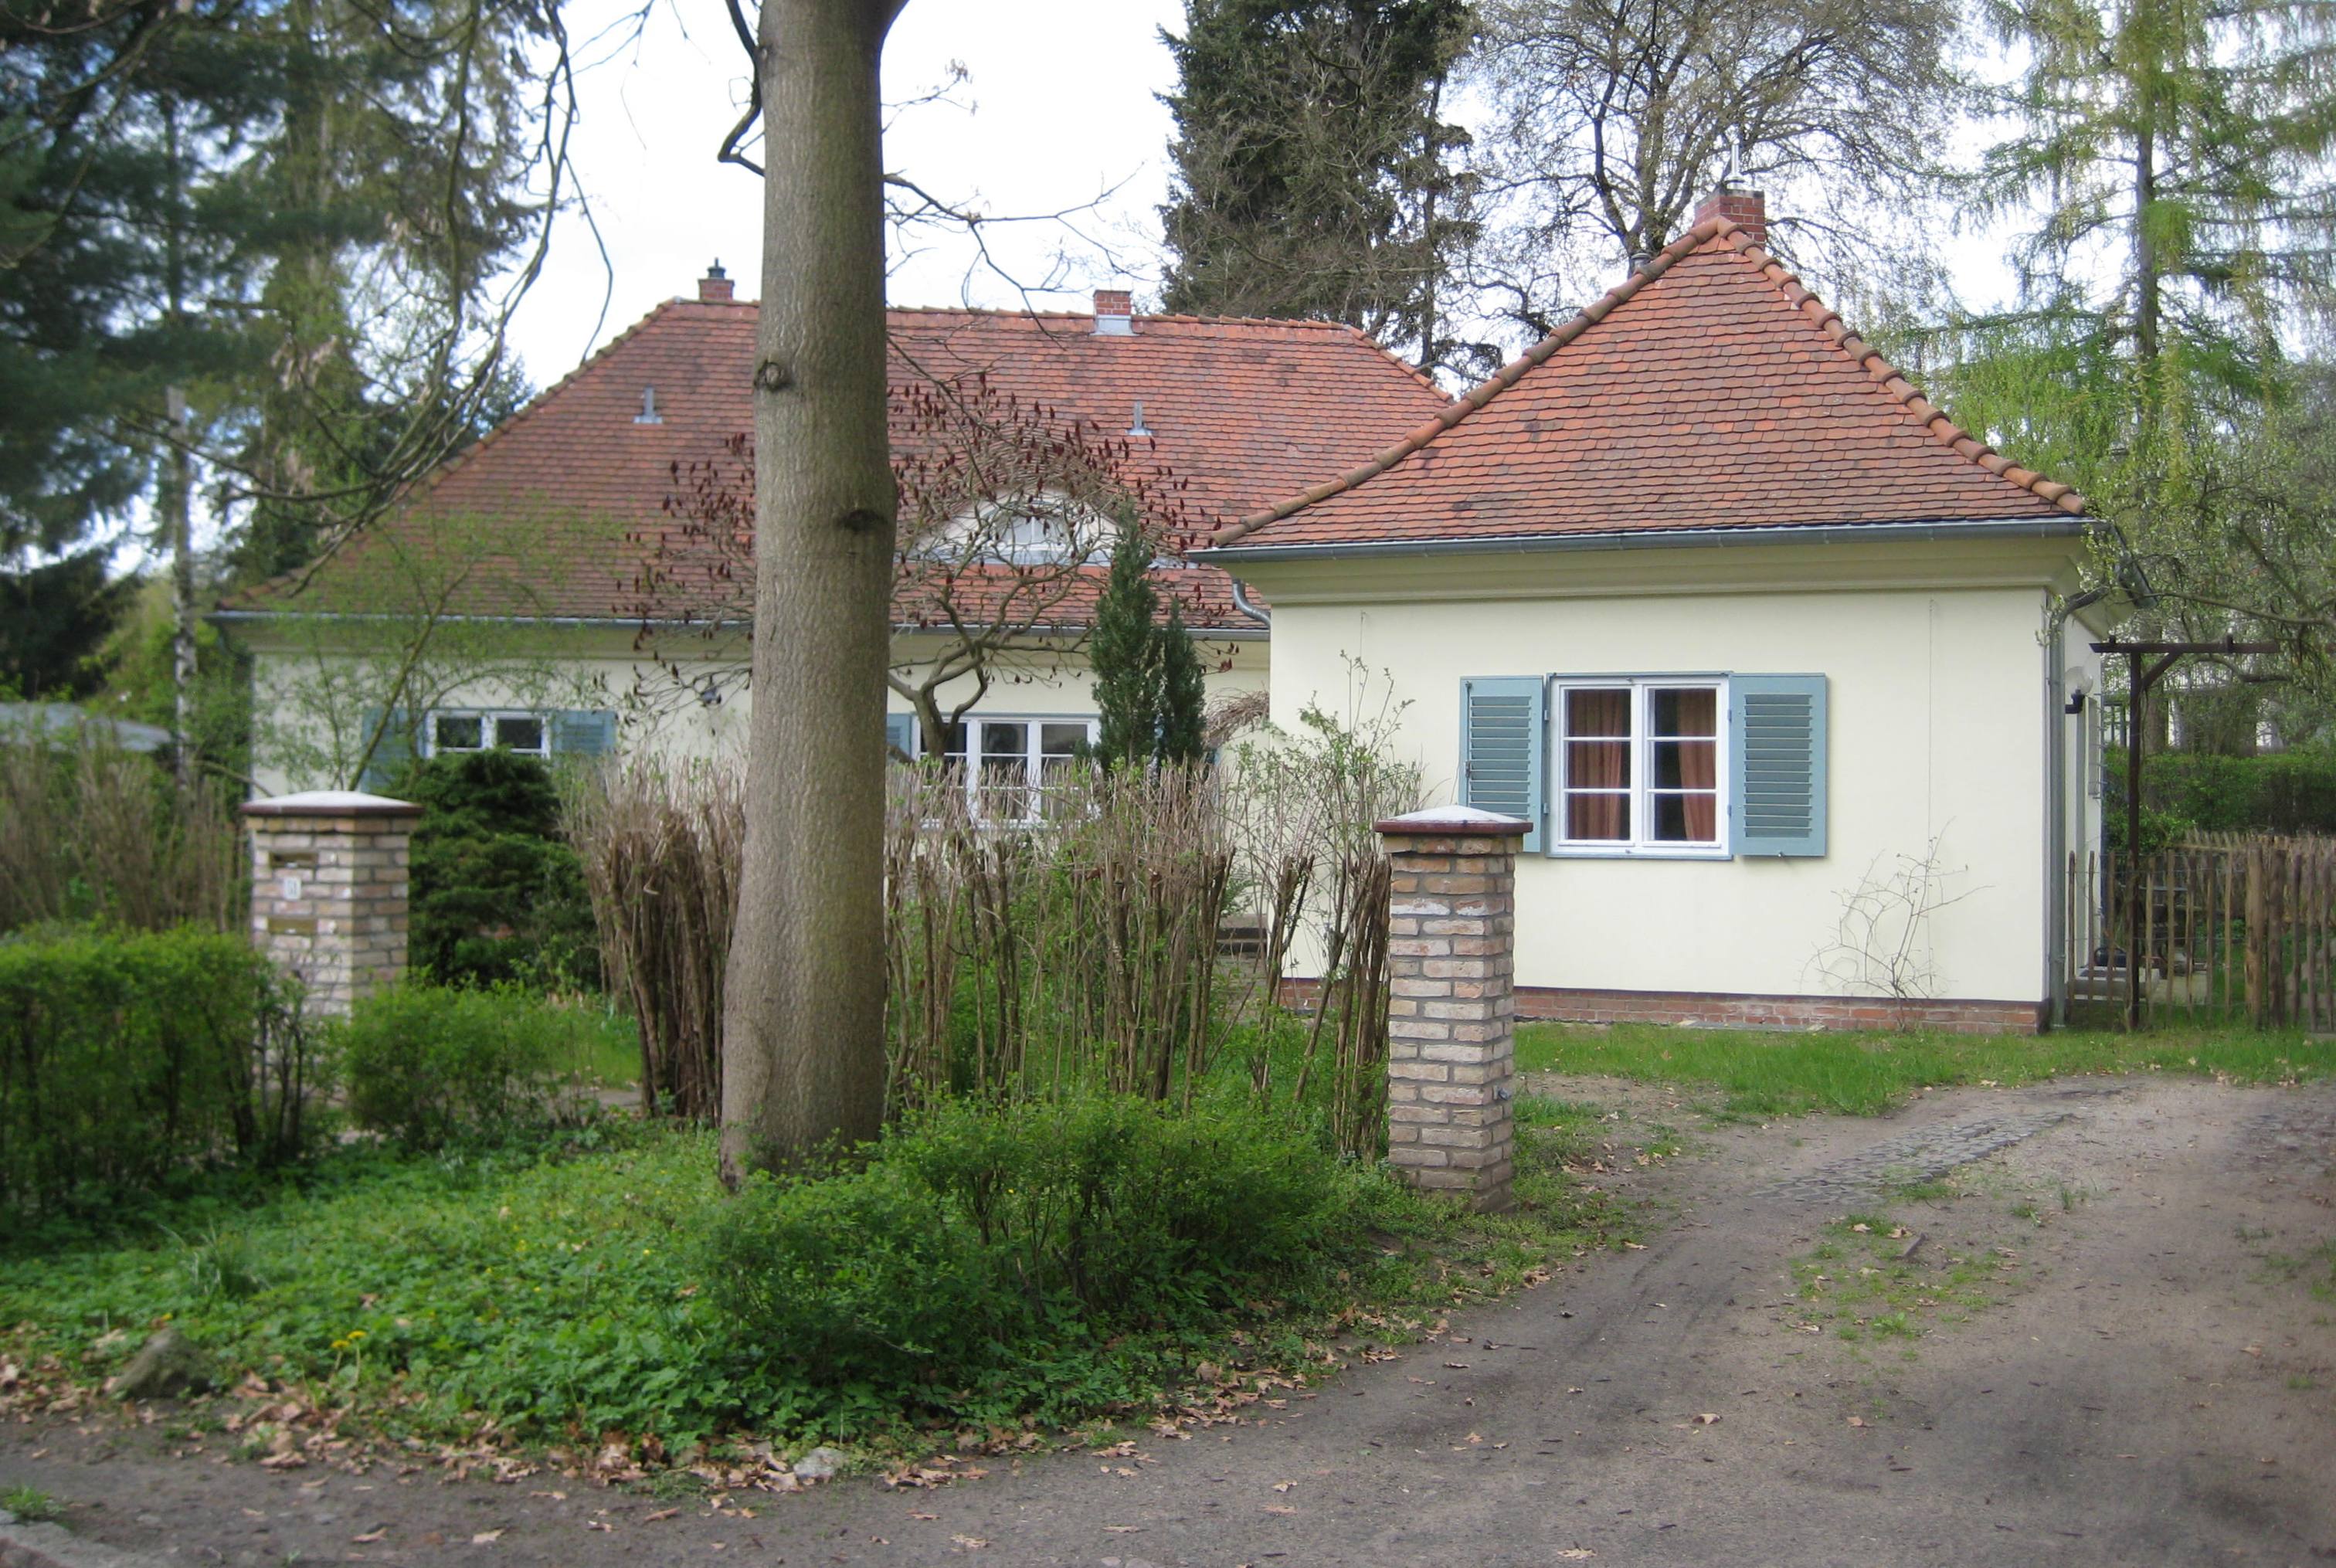 File Am Neuen Garten 50 51 2 04 2016 Jpg Wikimedia Commons